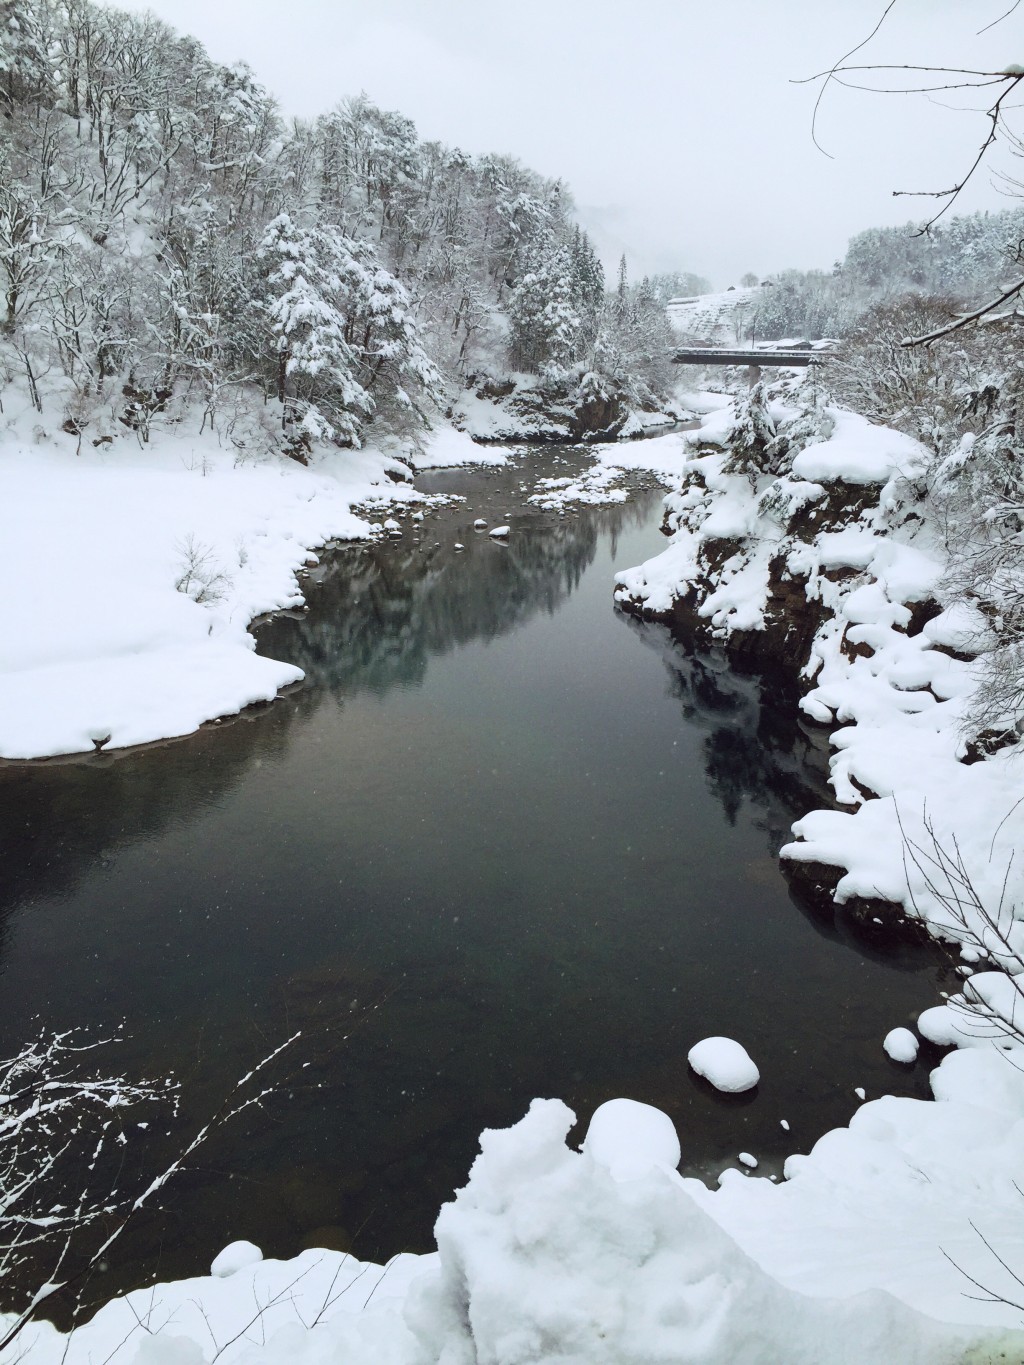 Upstream in the vicinity of Shirakawago